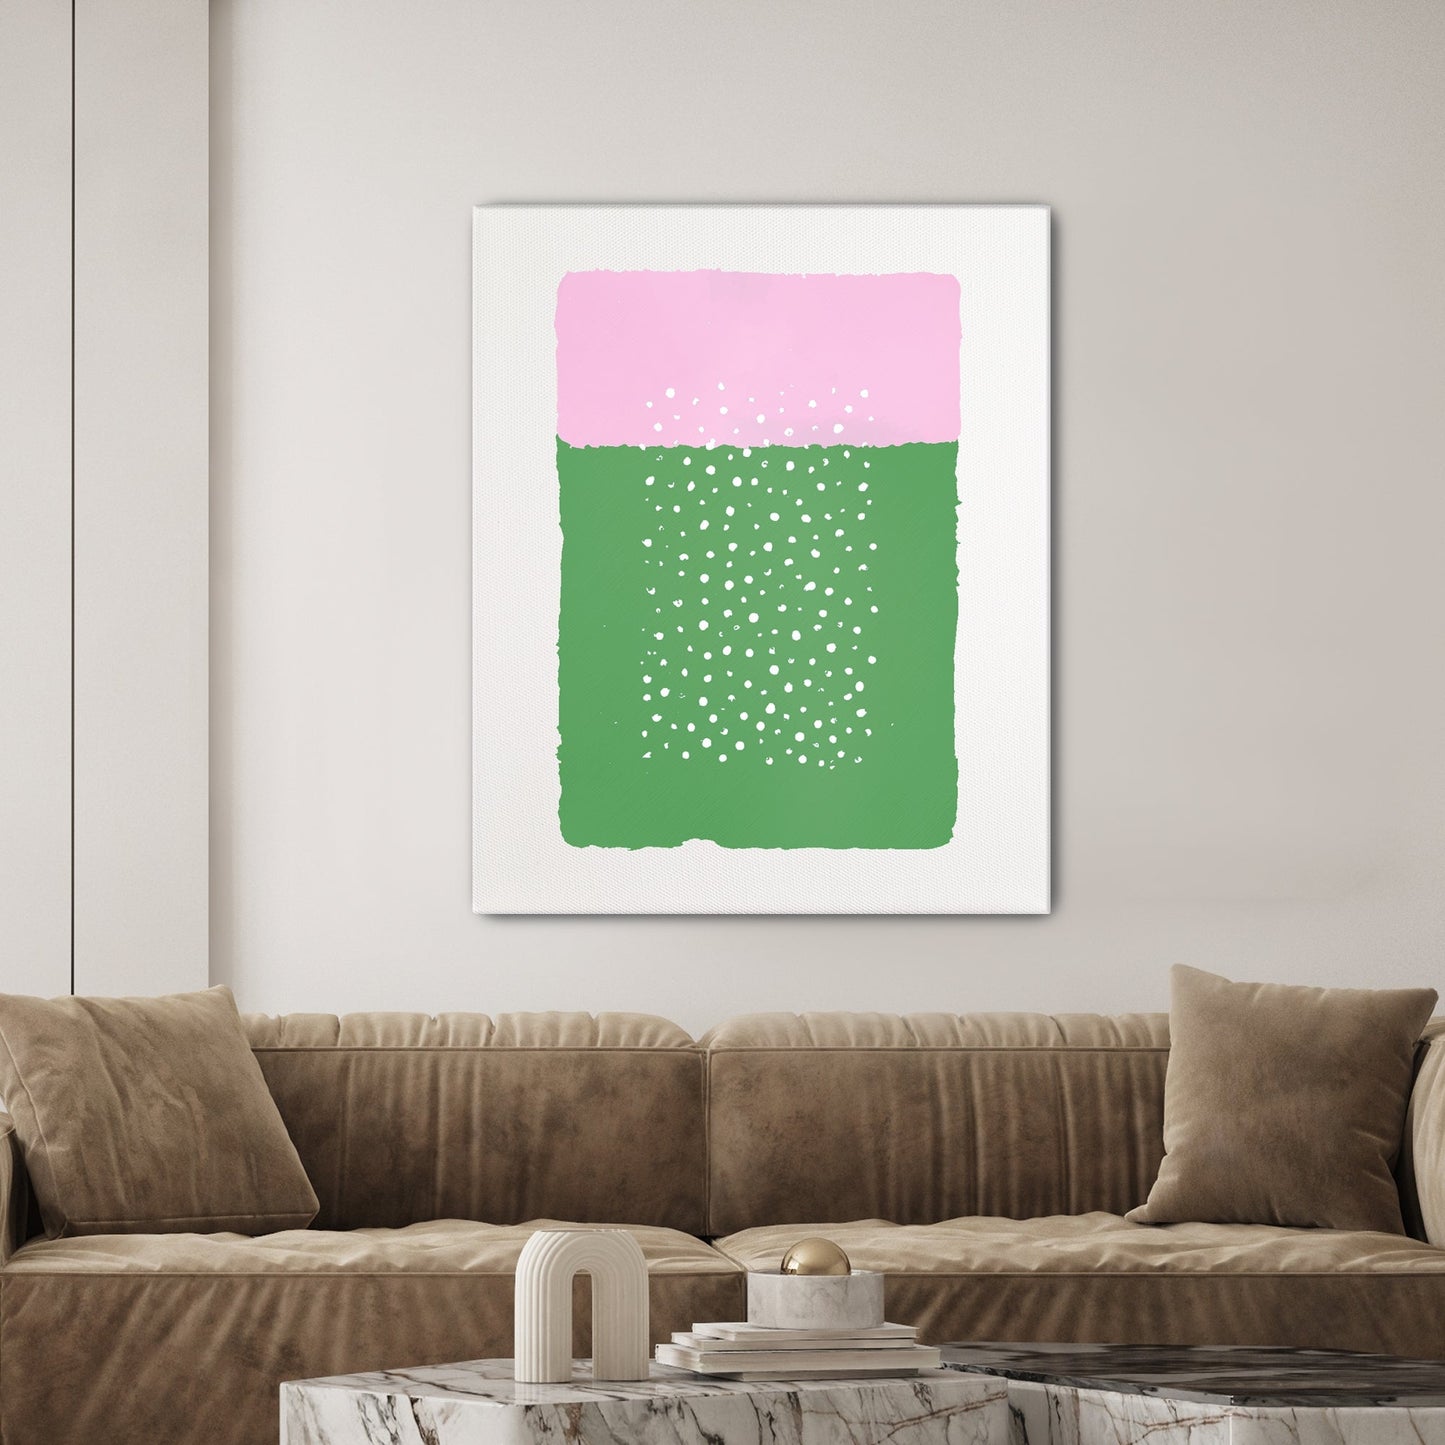 Abstract Pink + Green Shapes Acrylic Painting TEXTURED ART LULUSIMONSTUDIO 